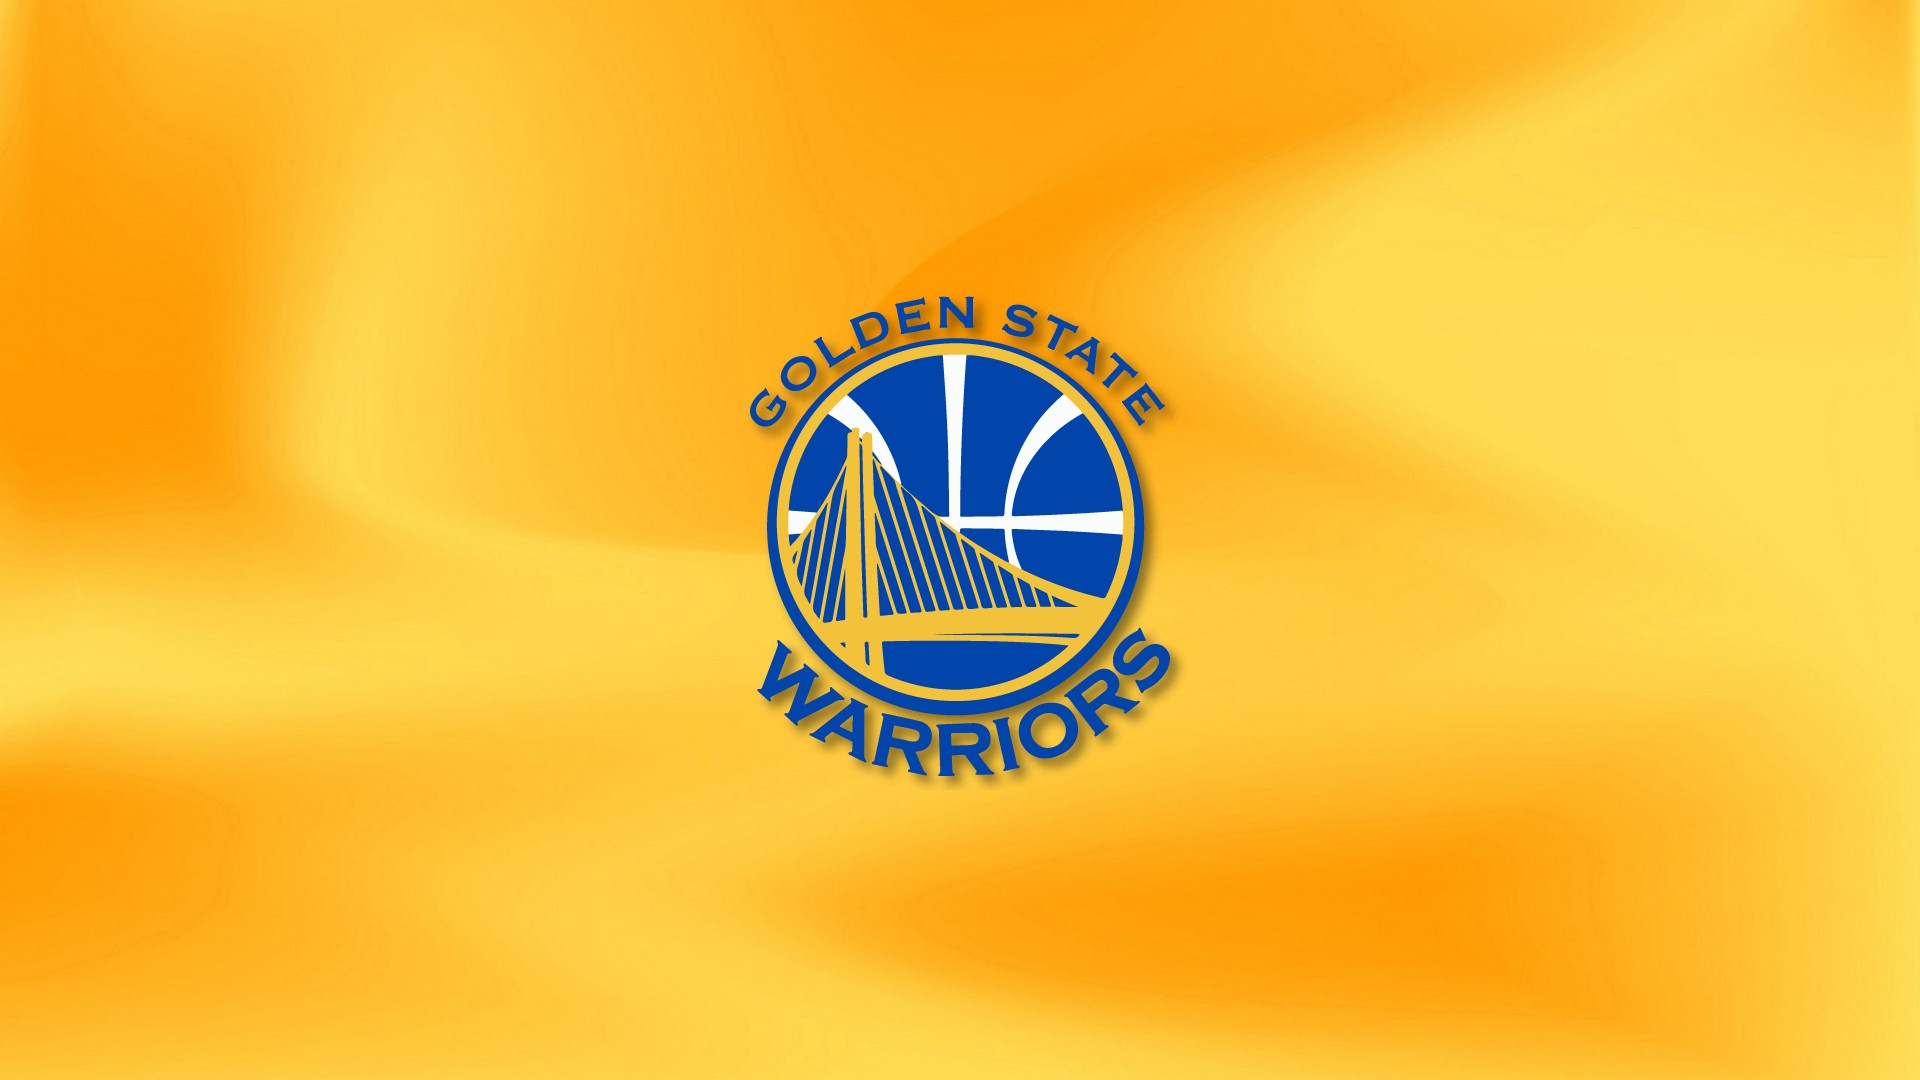 HD Golden State Warriors Backgrounds